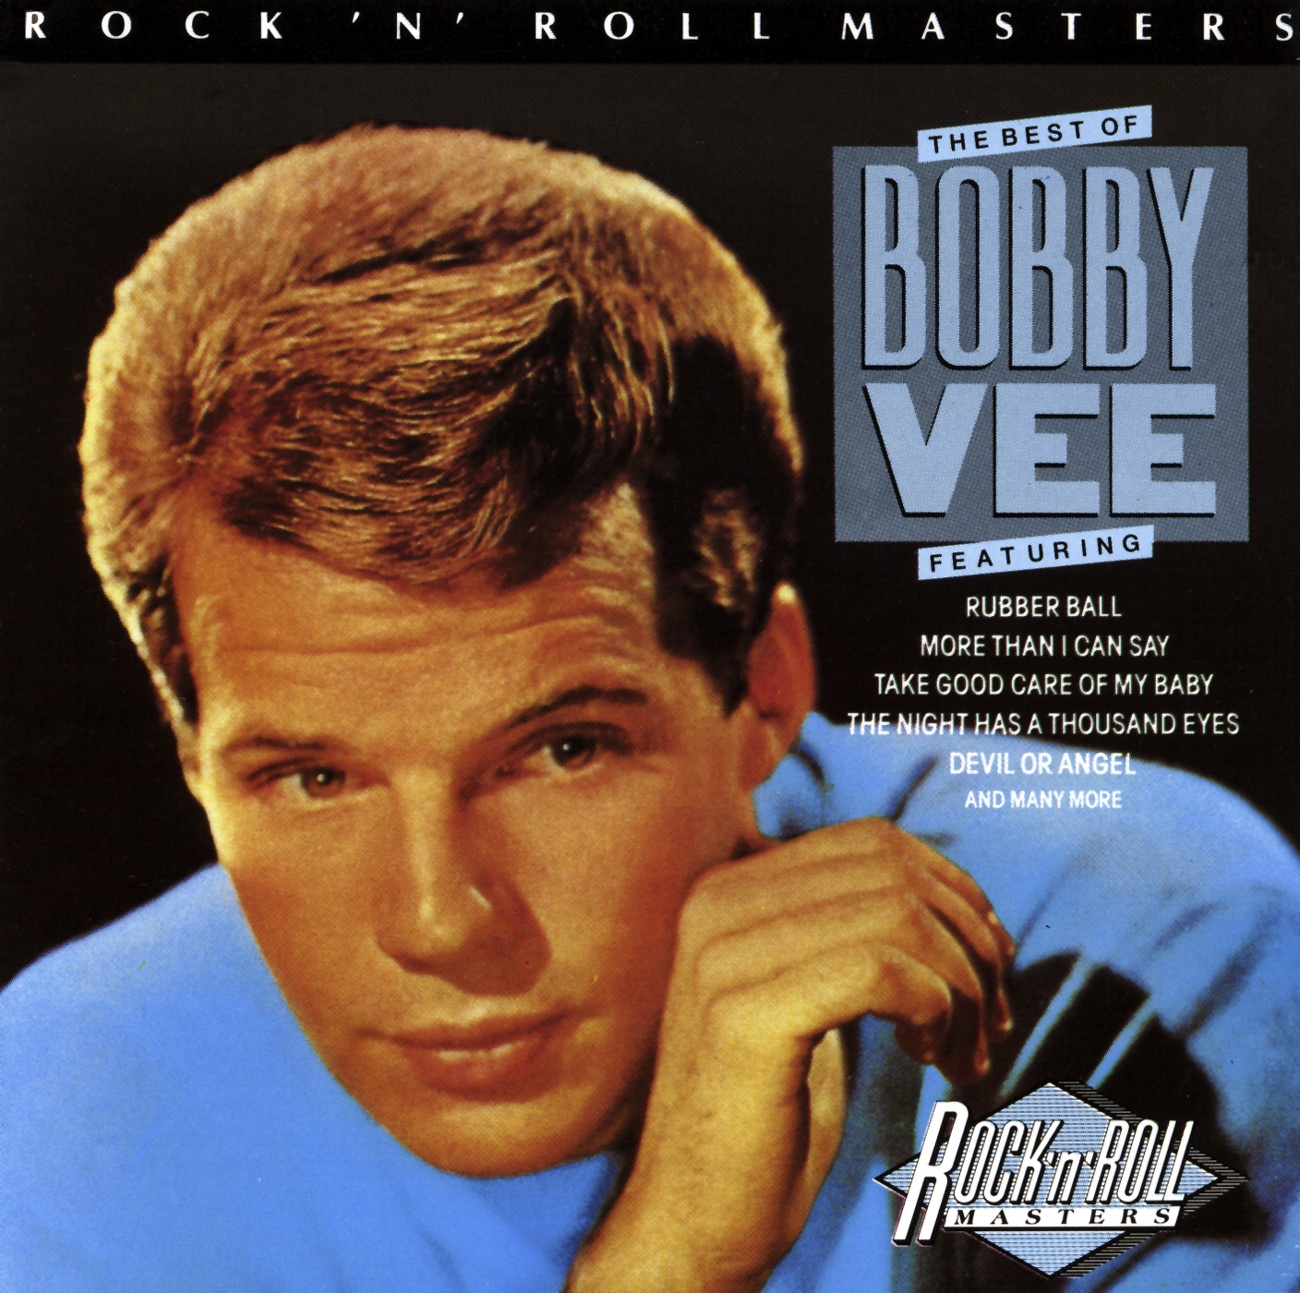 The Best Of Bobby Vee